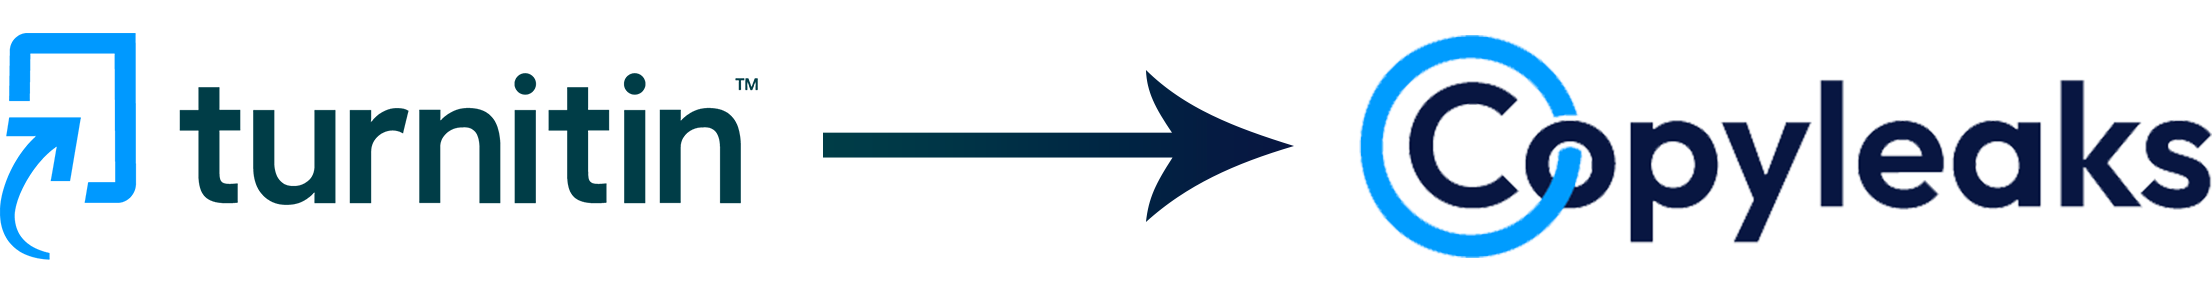 Arrow pointing from Turnitin logo to Copyleaks logo.